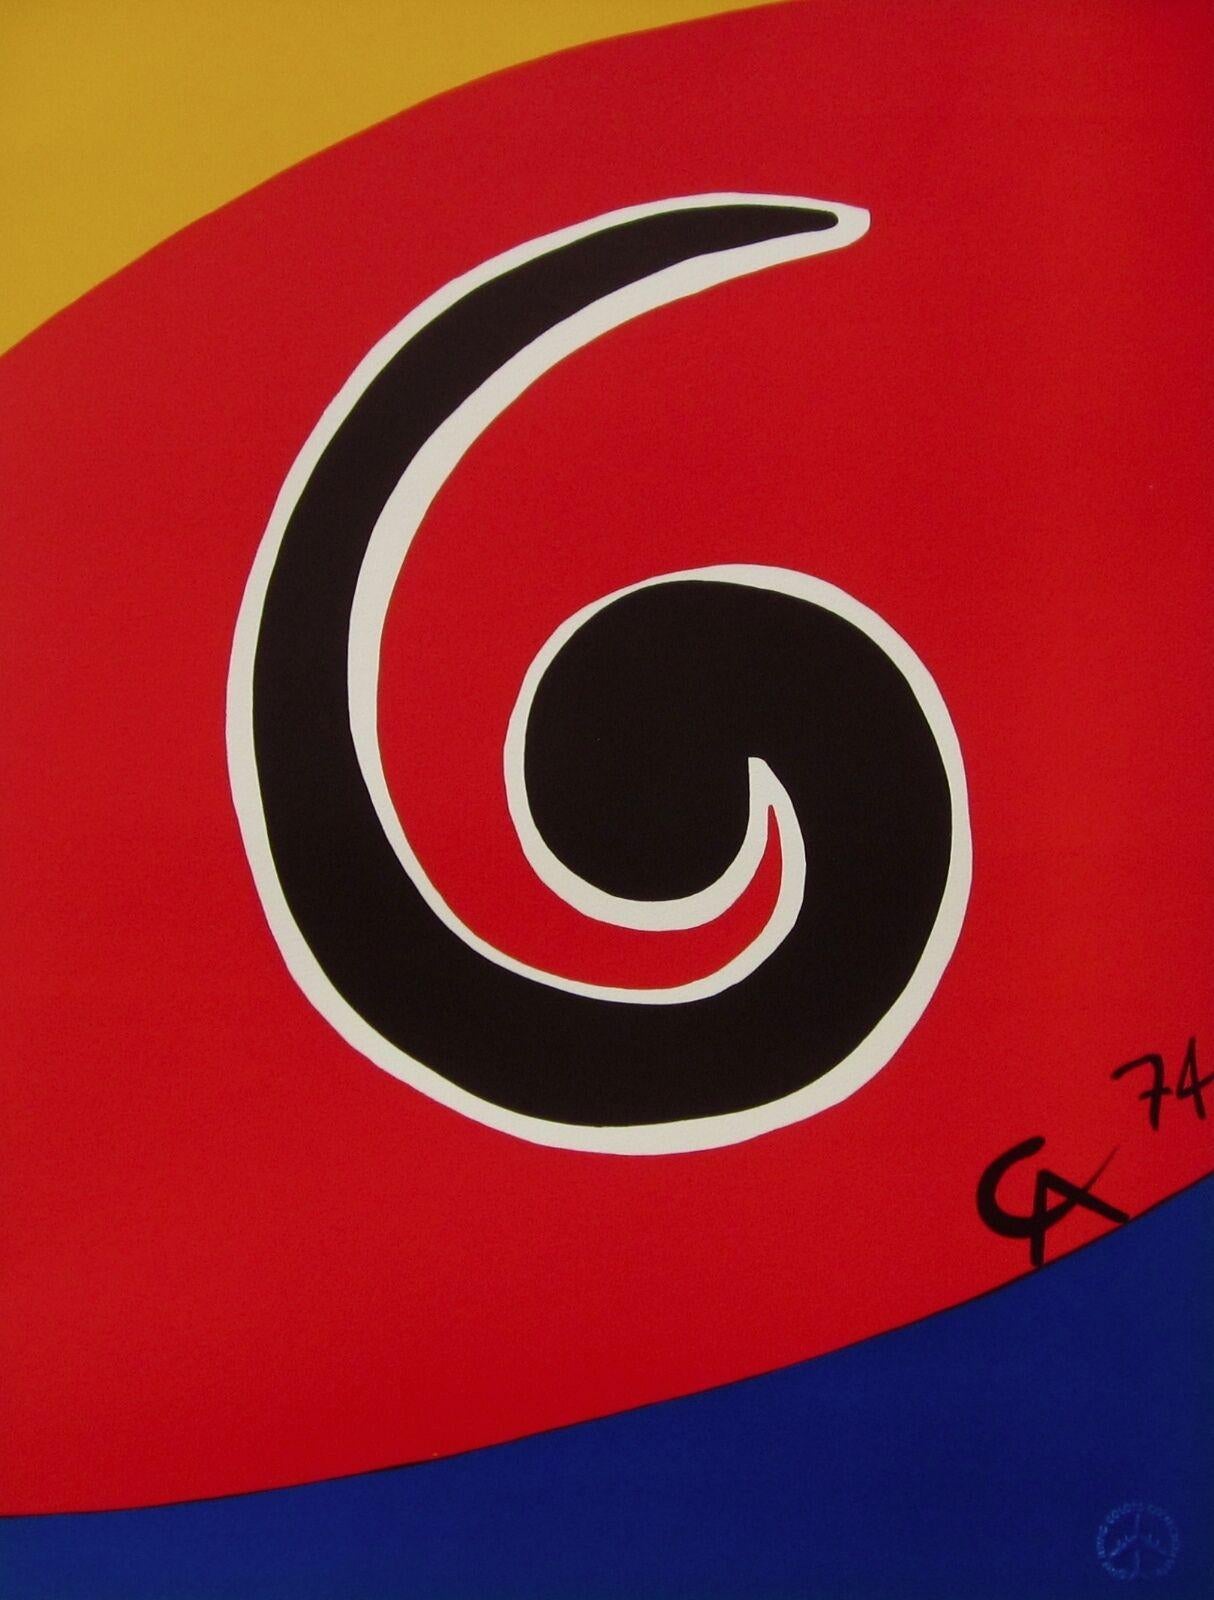 Flying Colors Collection (5 artworks) - Modern Print by Alexander Calder